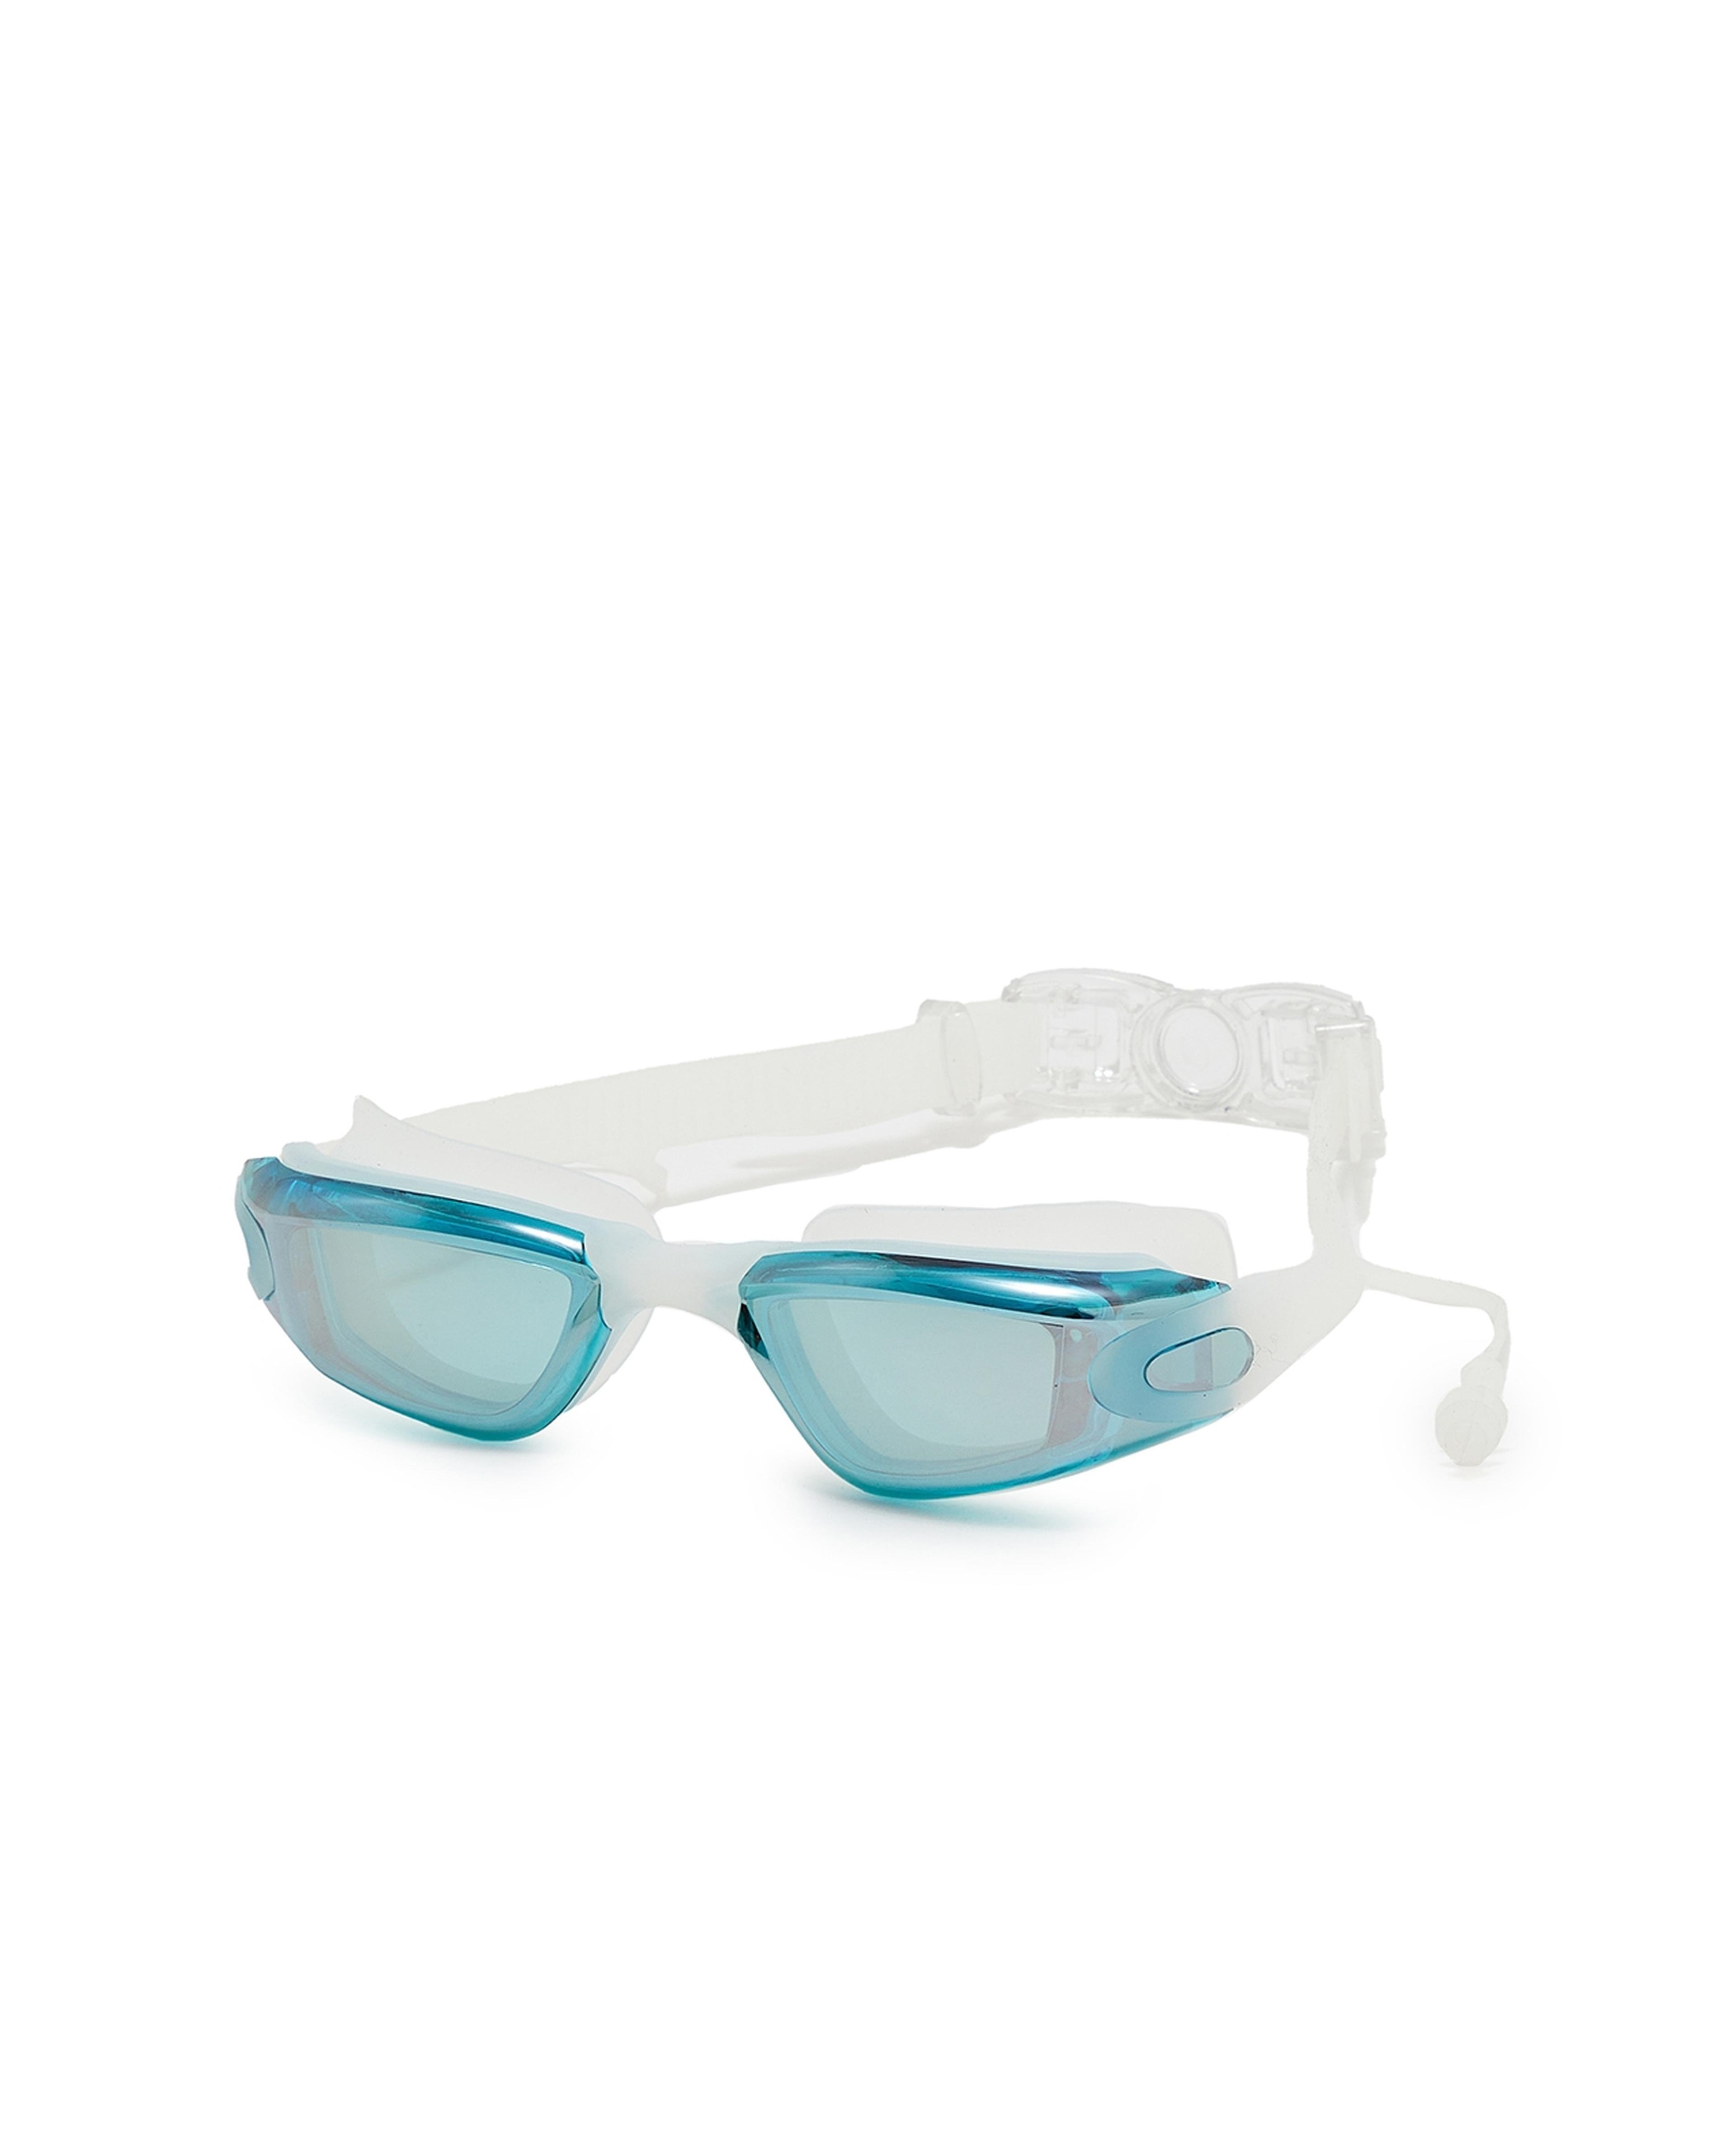 Smocked Swimming Goggles